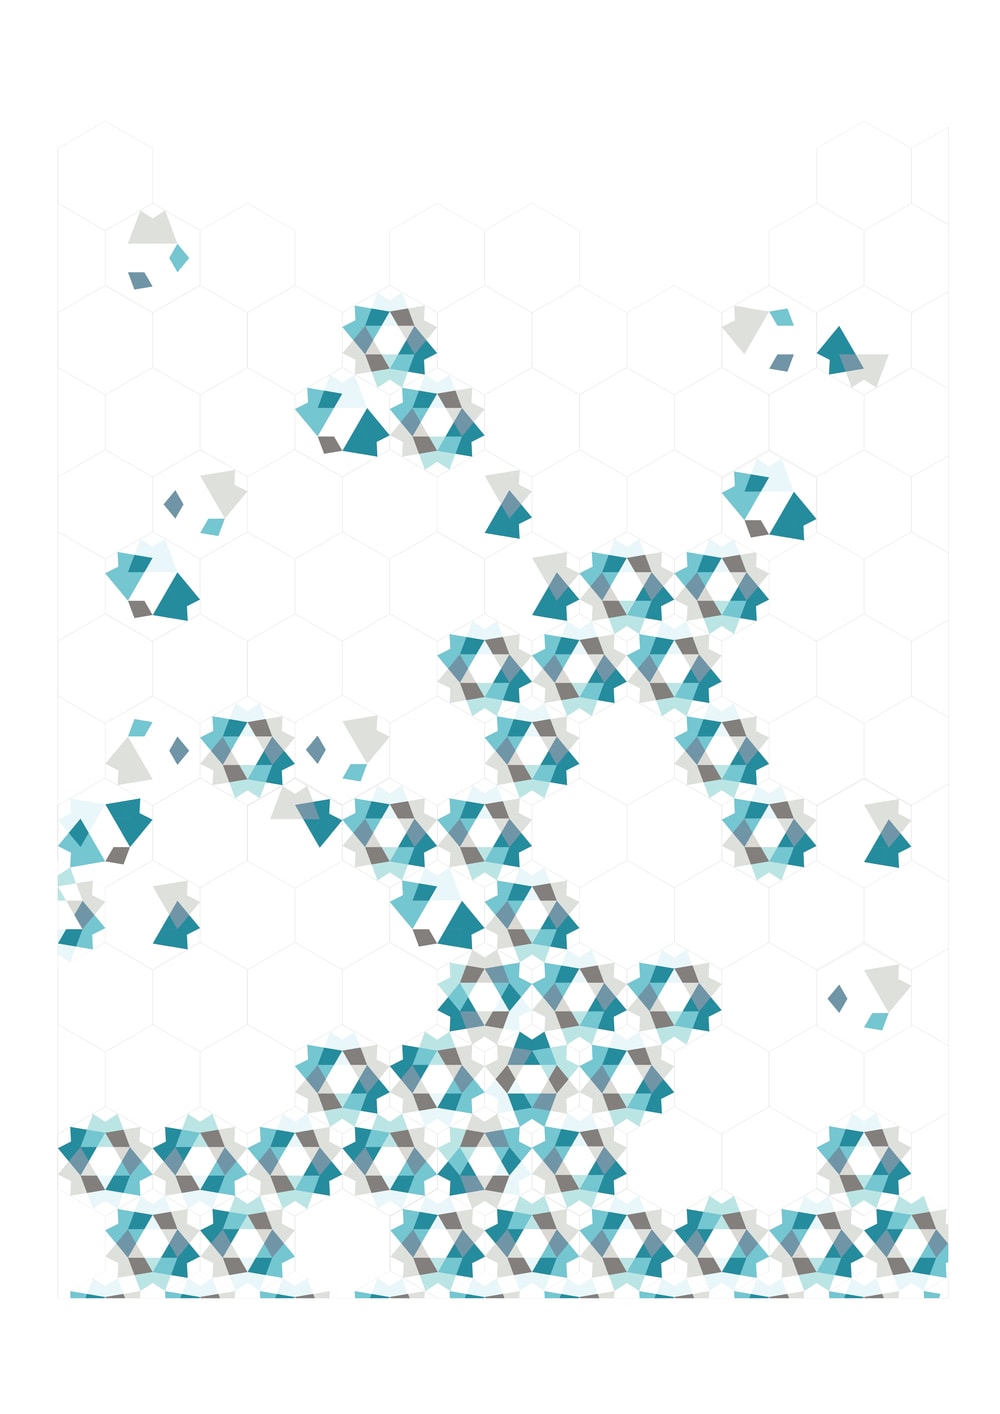 Shapes - Hexagon 2010